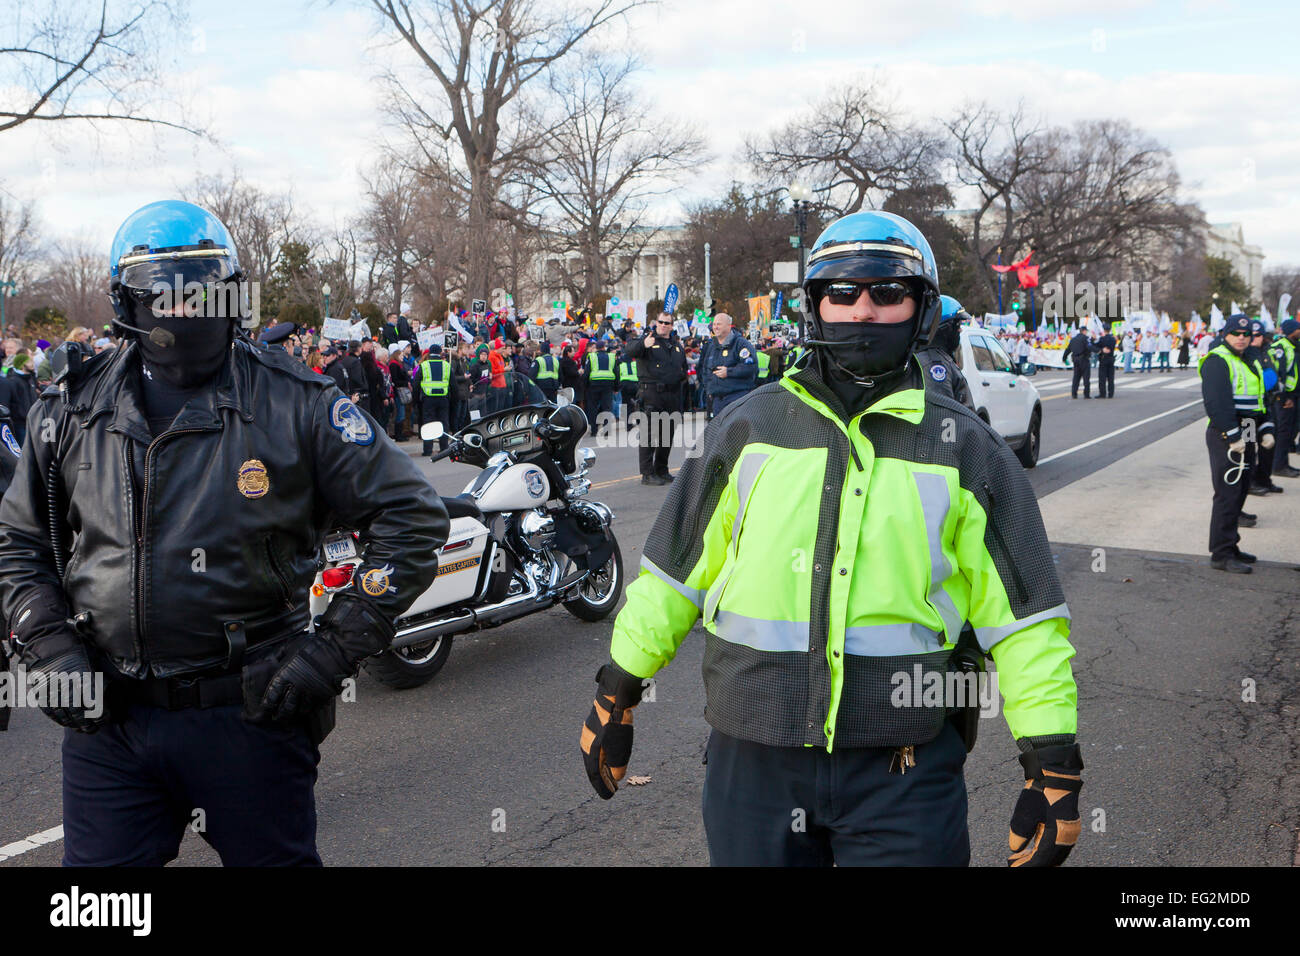 Police blockade at a public demonstration - Washington, DC USA Stock Photo